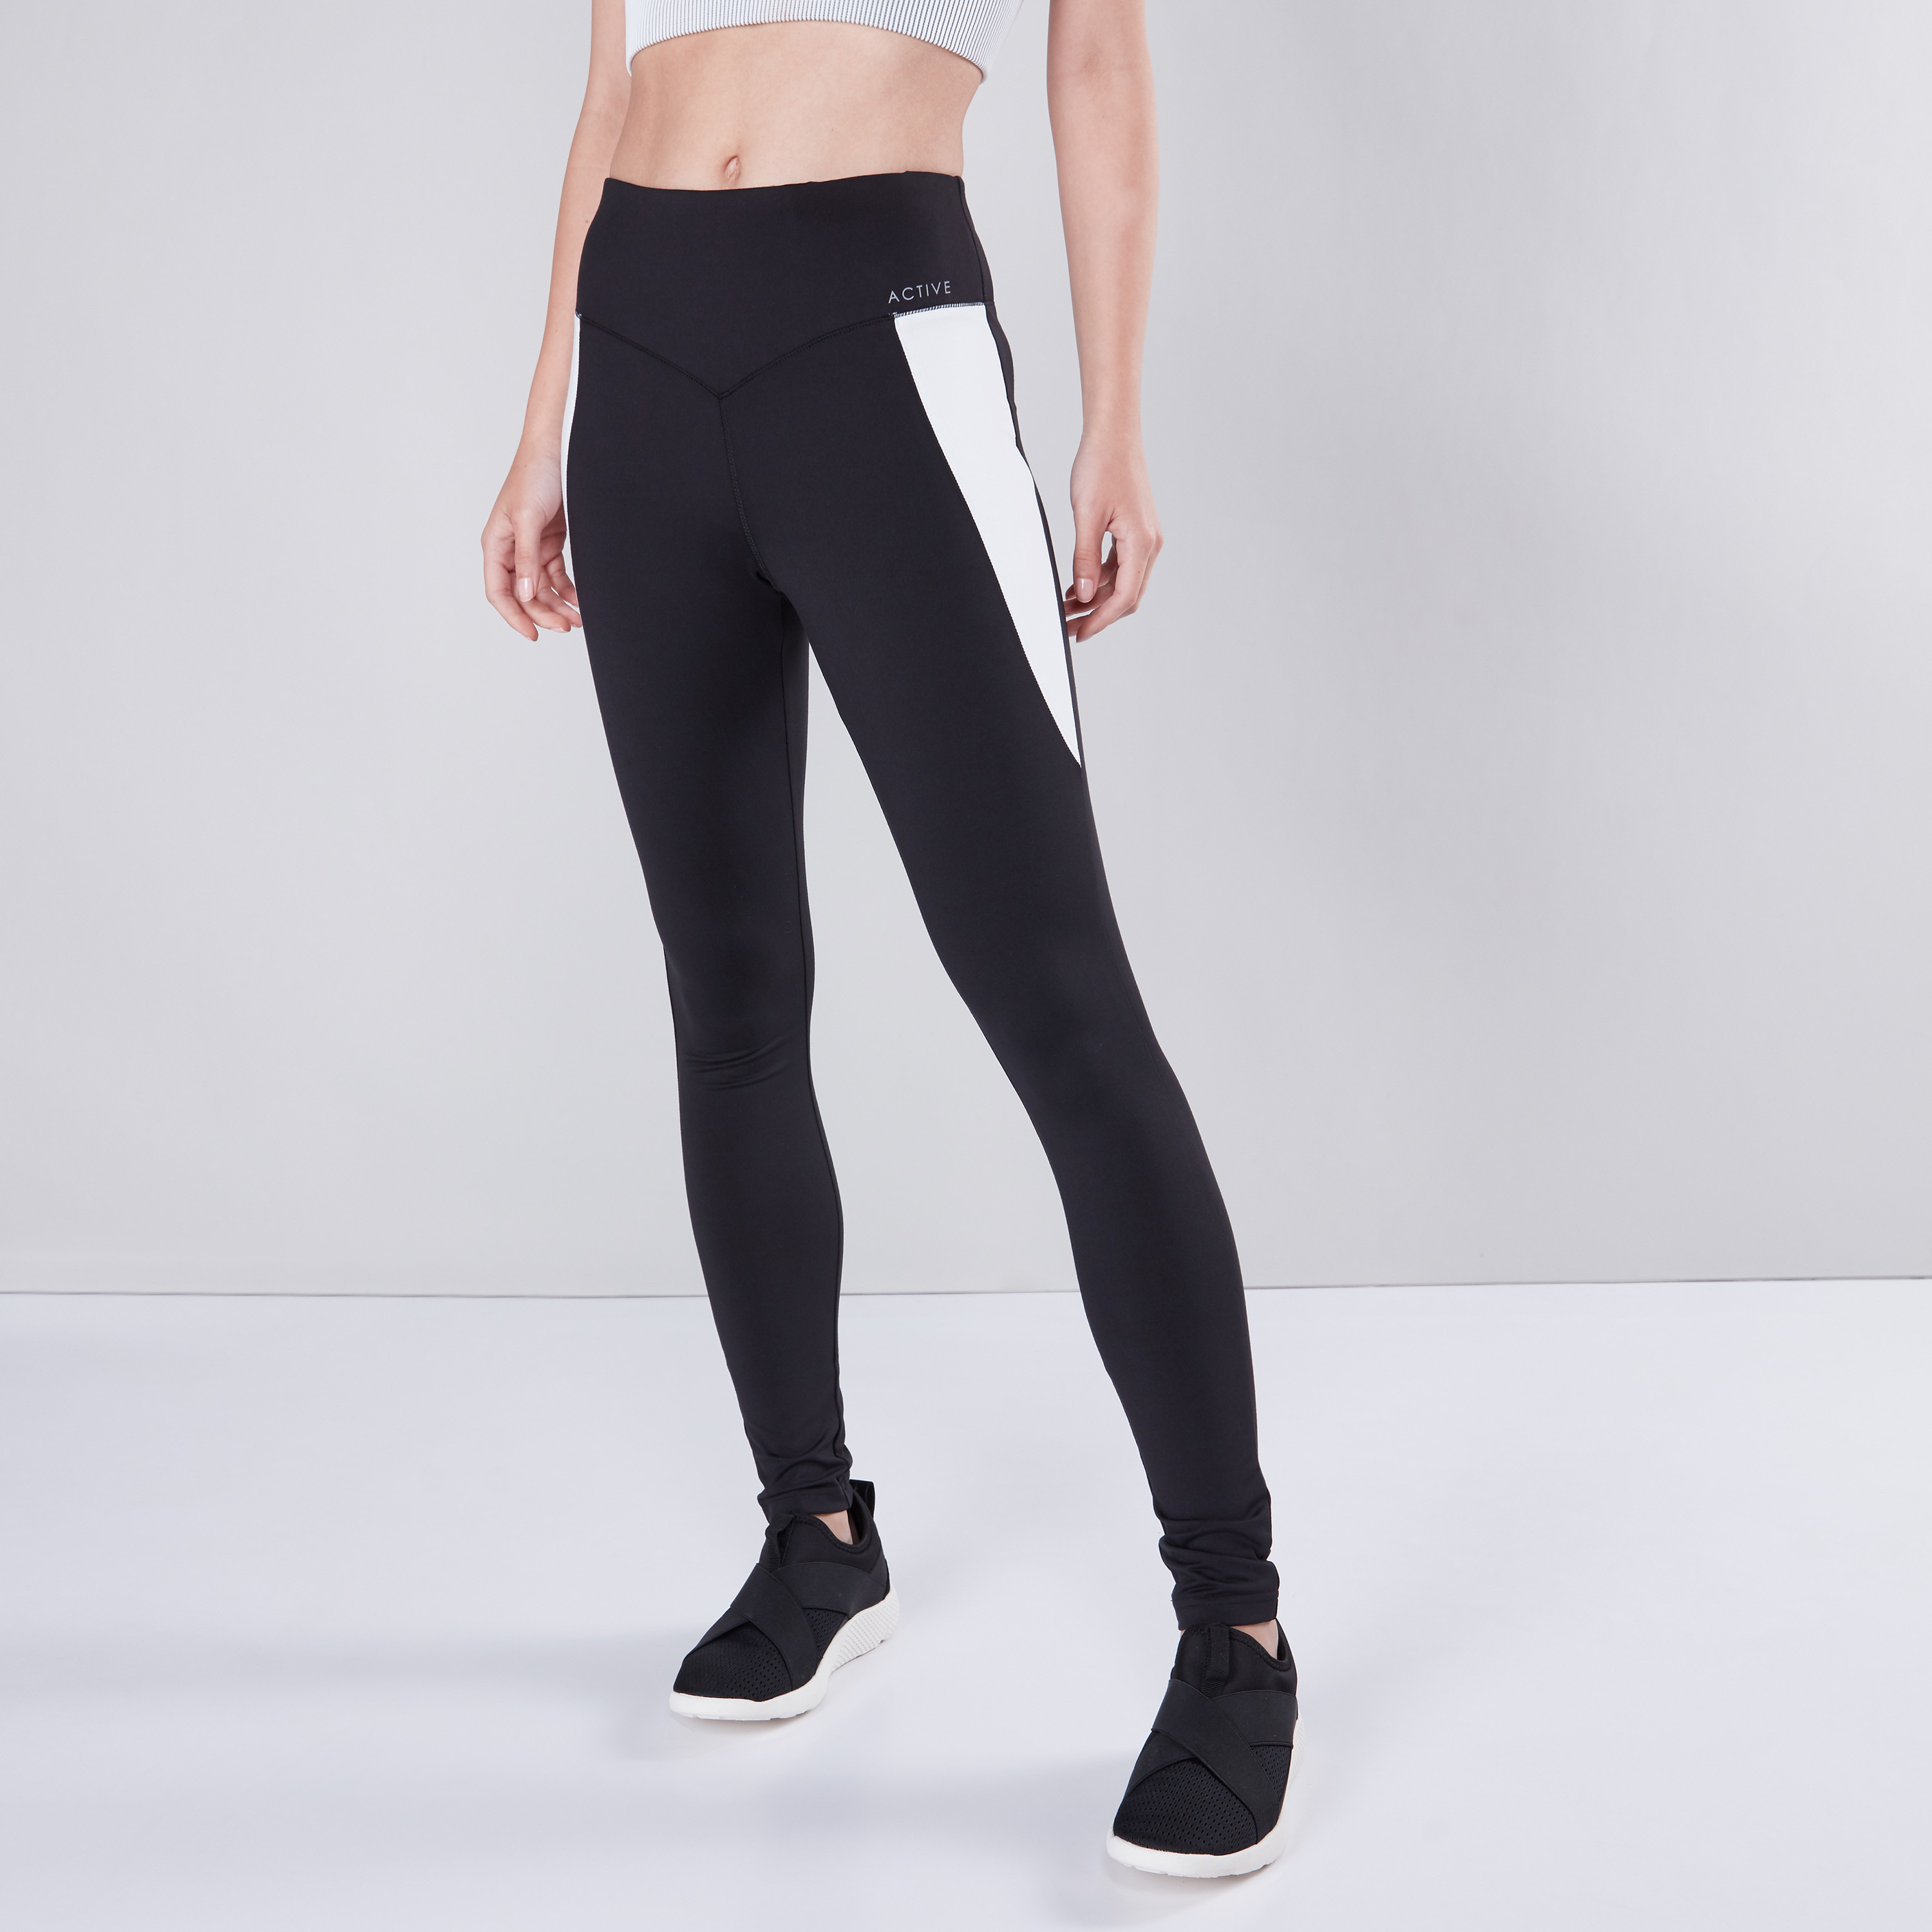 Kappa x Shadow Hill Black Salber Skin Fit Leggings | Workout leggings,  Clothes design, Leggings